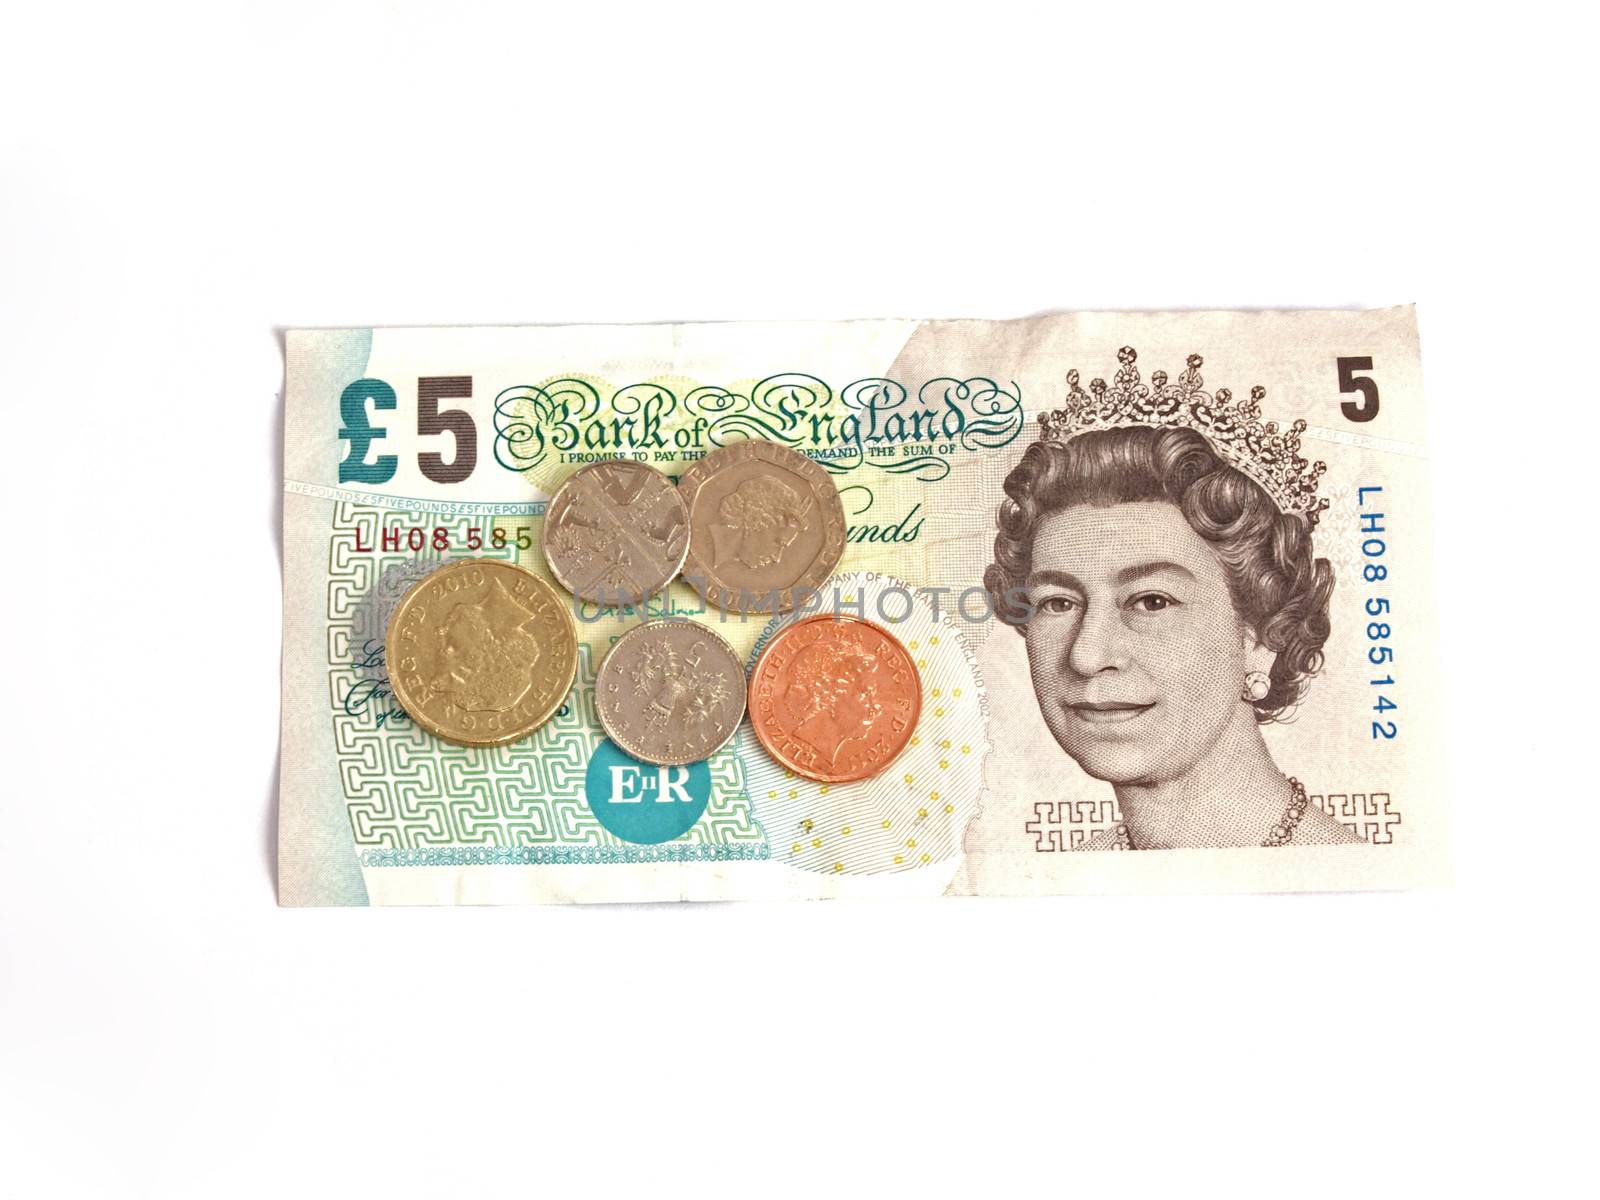 UK national minimum wage 6.31 by ianlangley